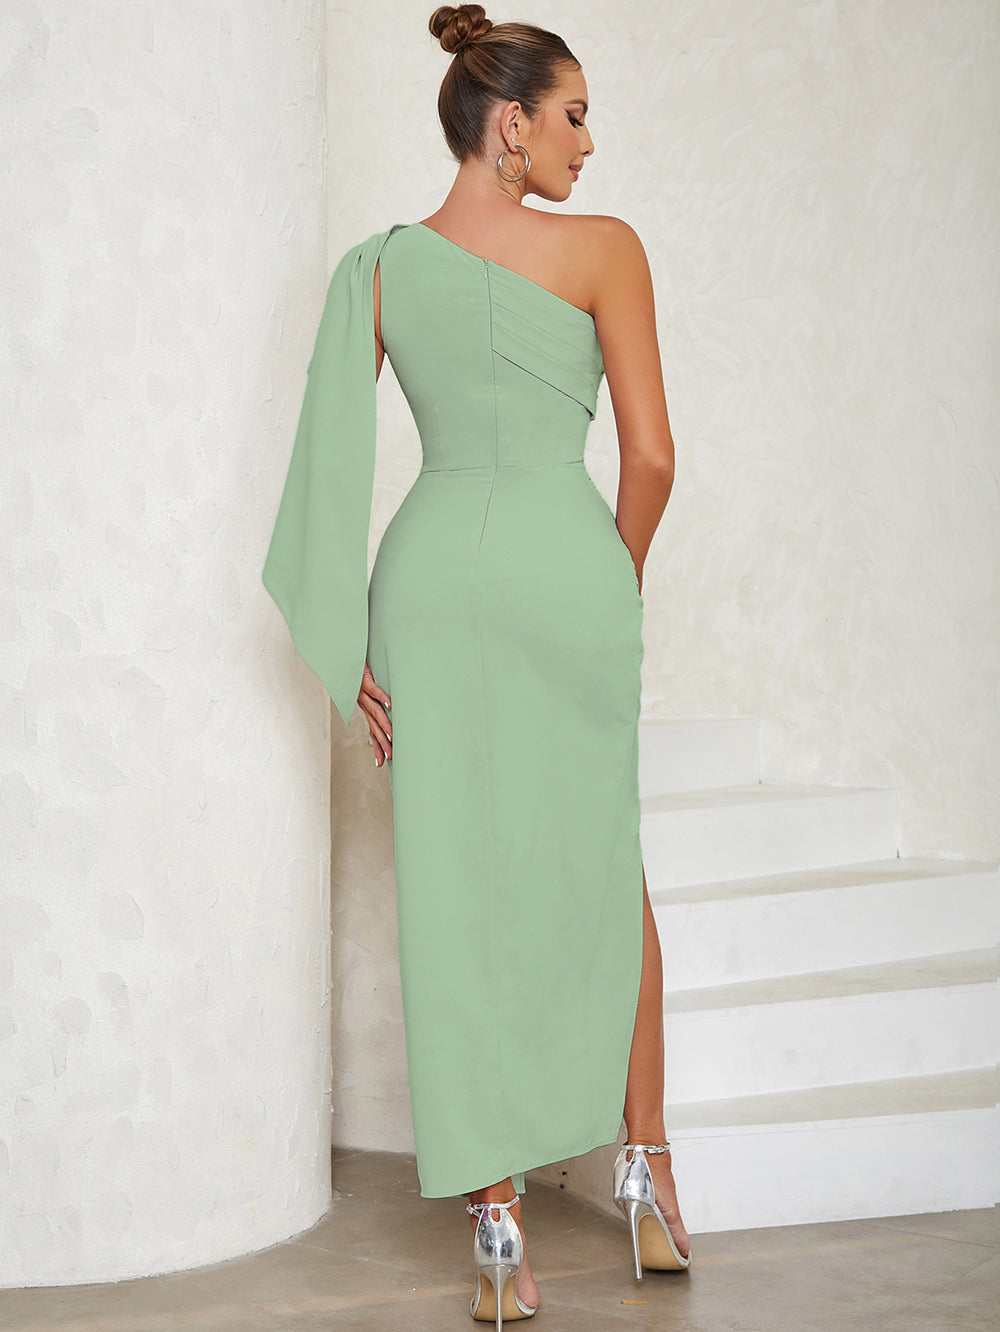 Green Bodycon Dress HB01340